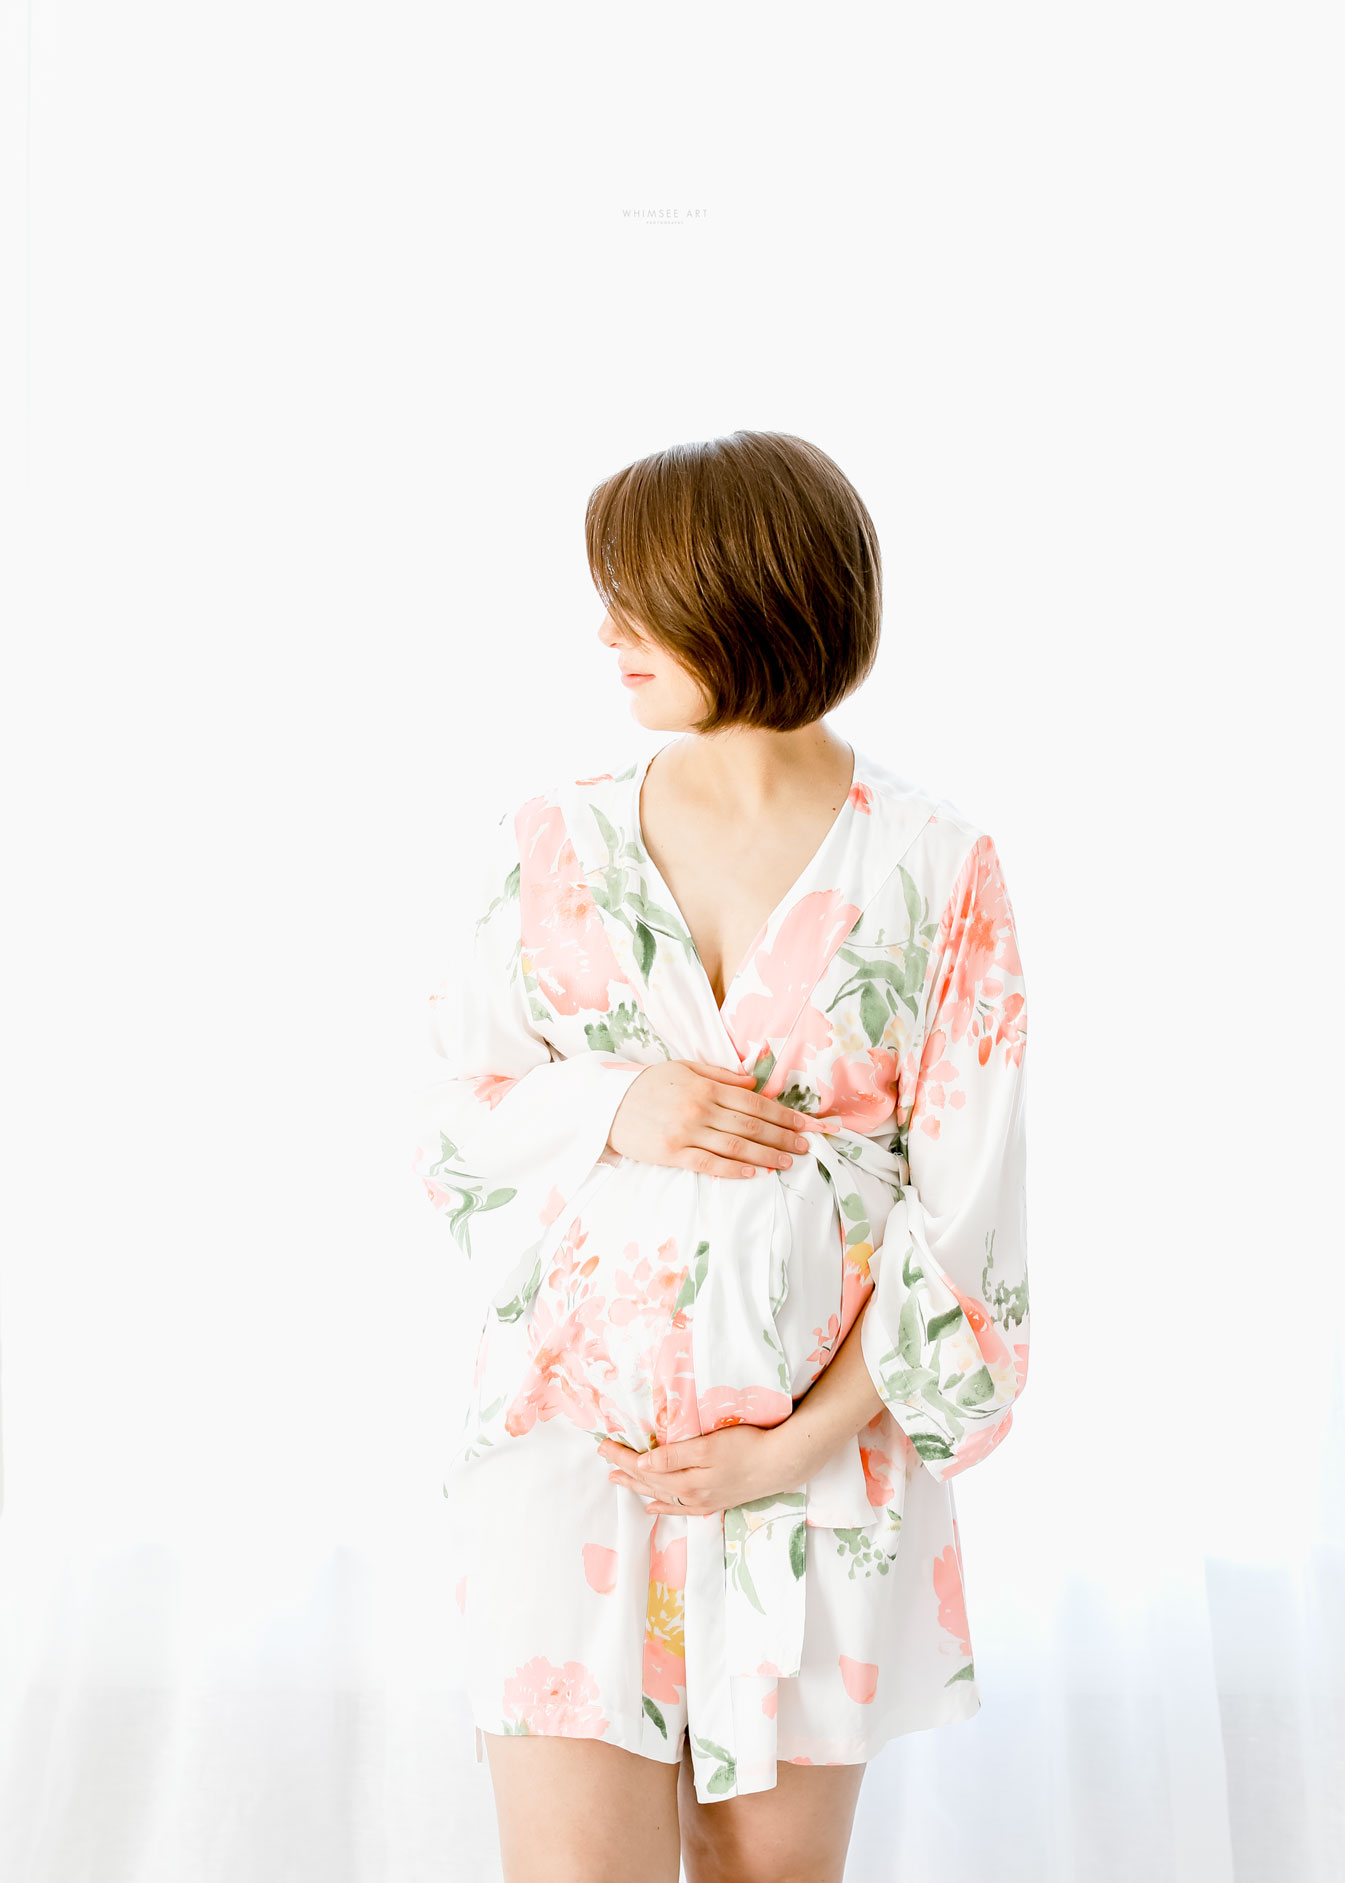 Sarah's Glimpse | Roanoke Maternity Photographer | Whimsee Art Photography